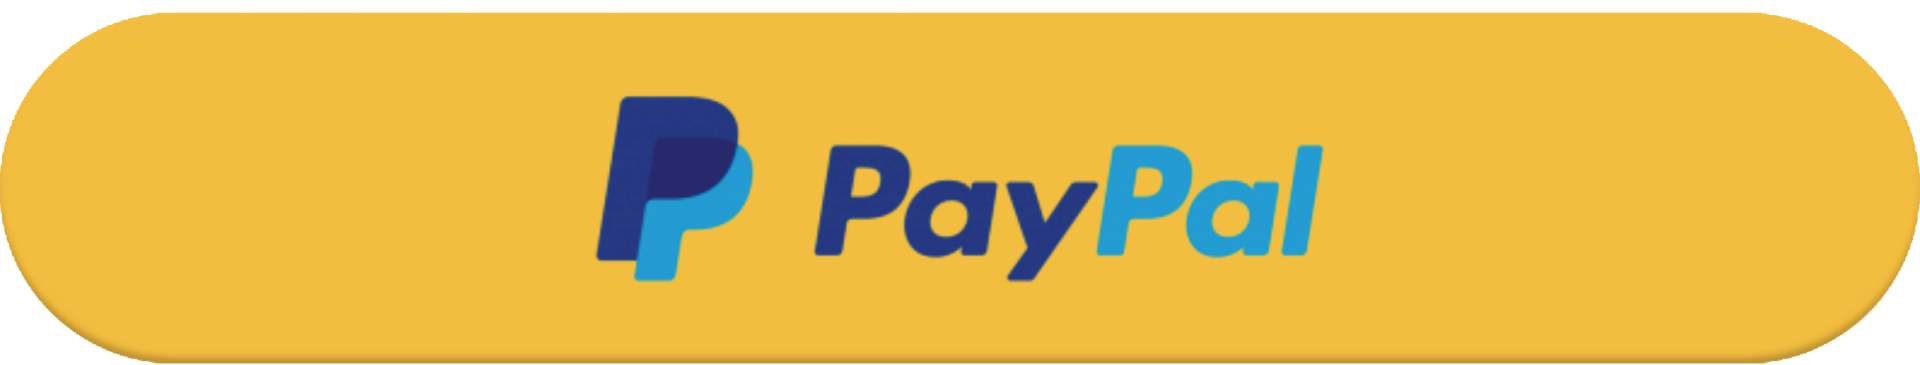 PayPal_Button